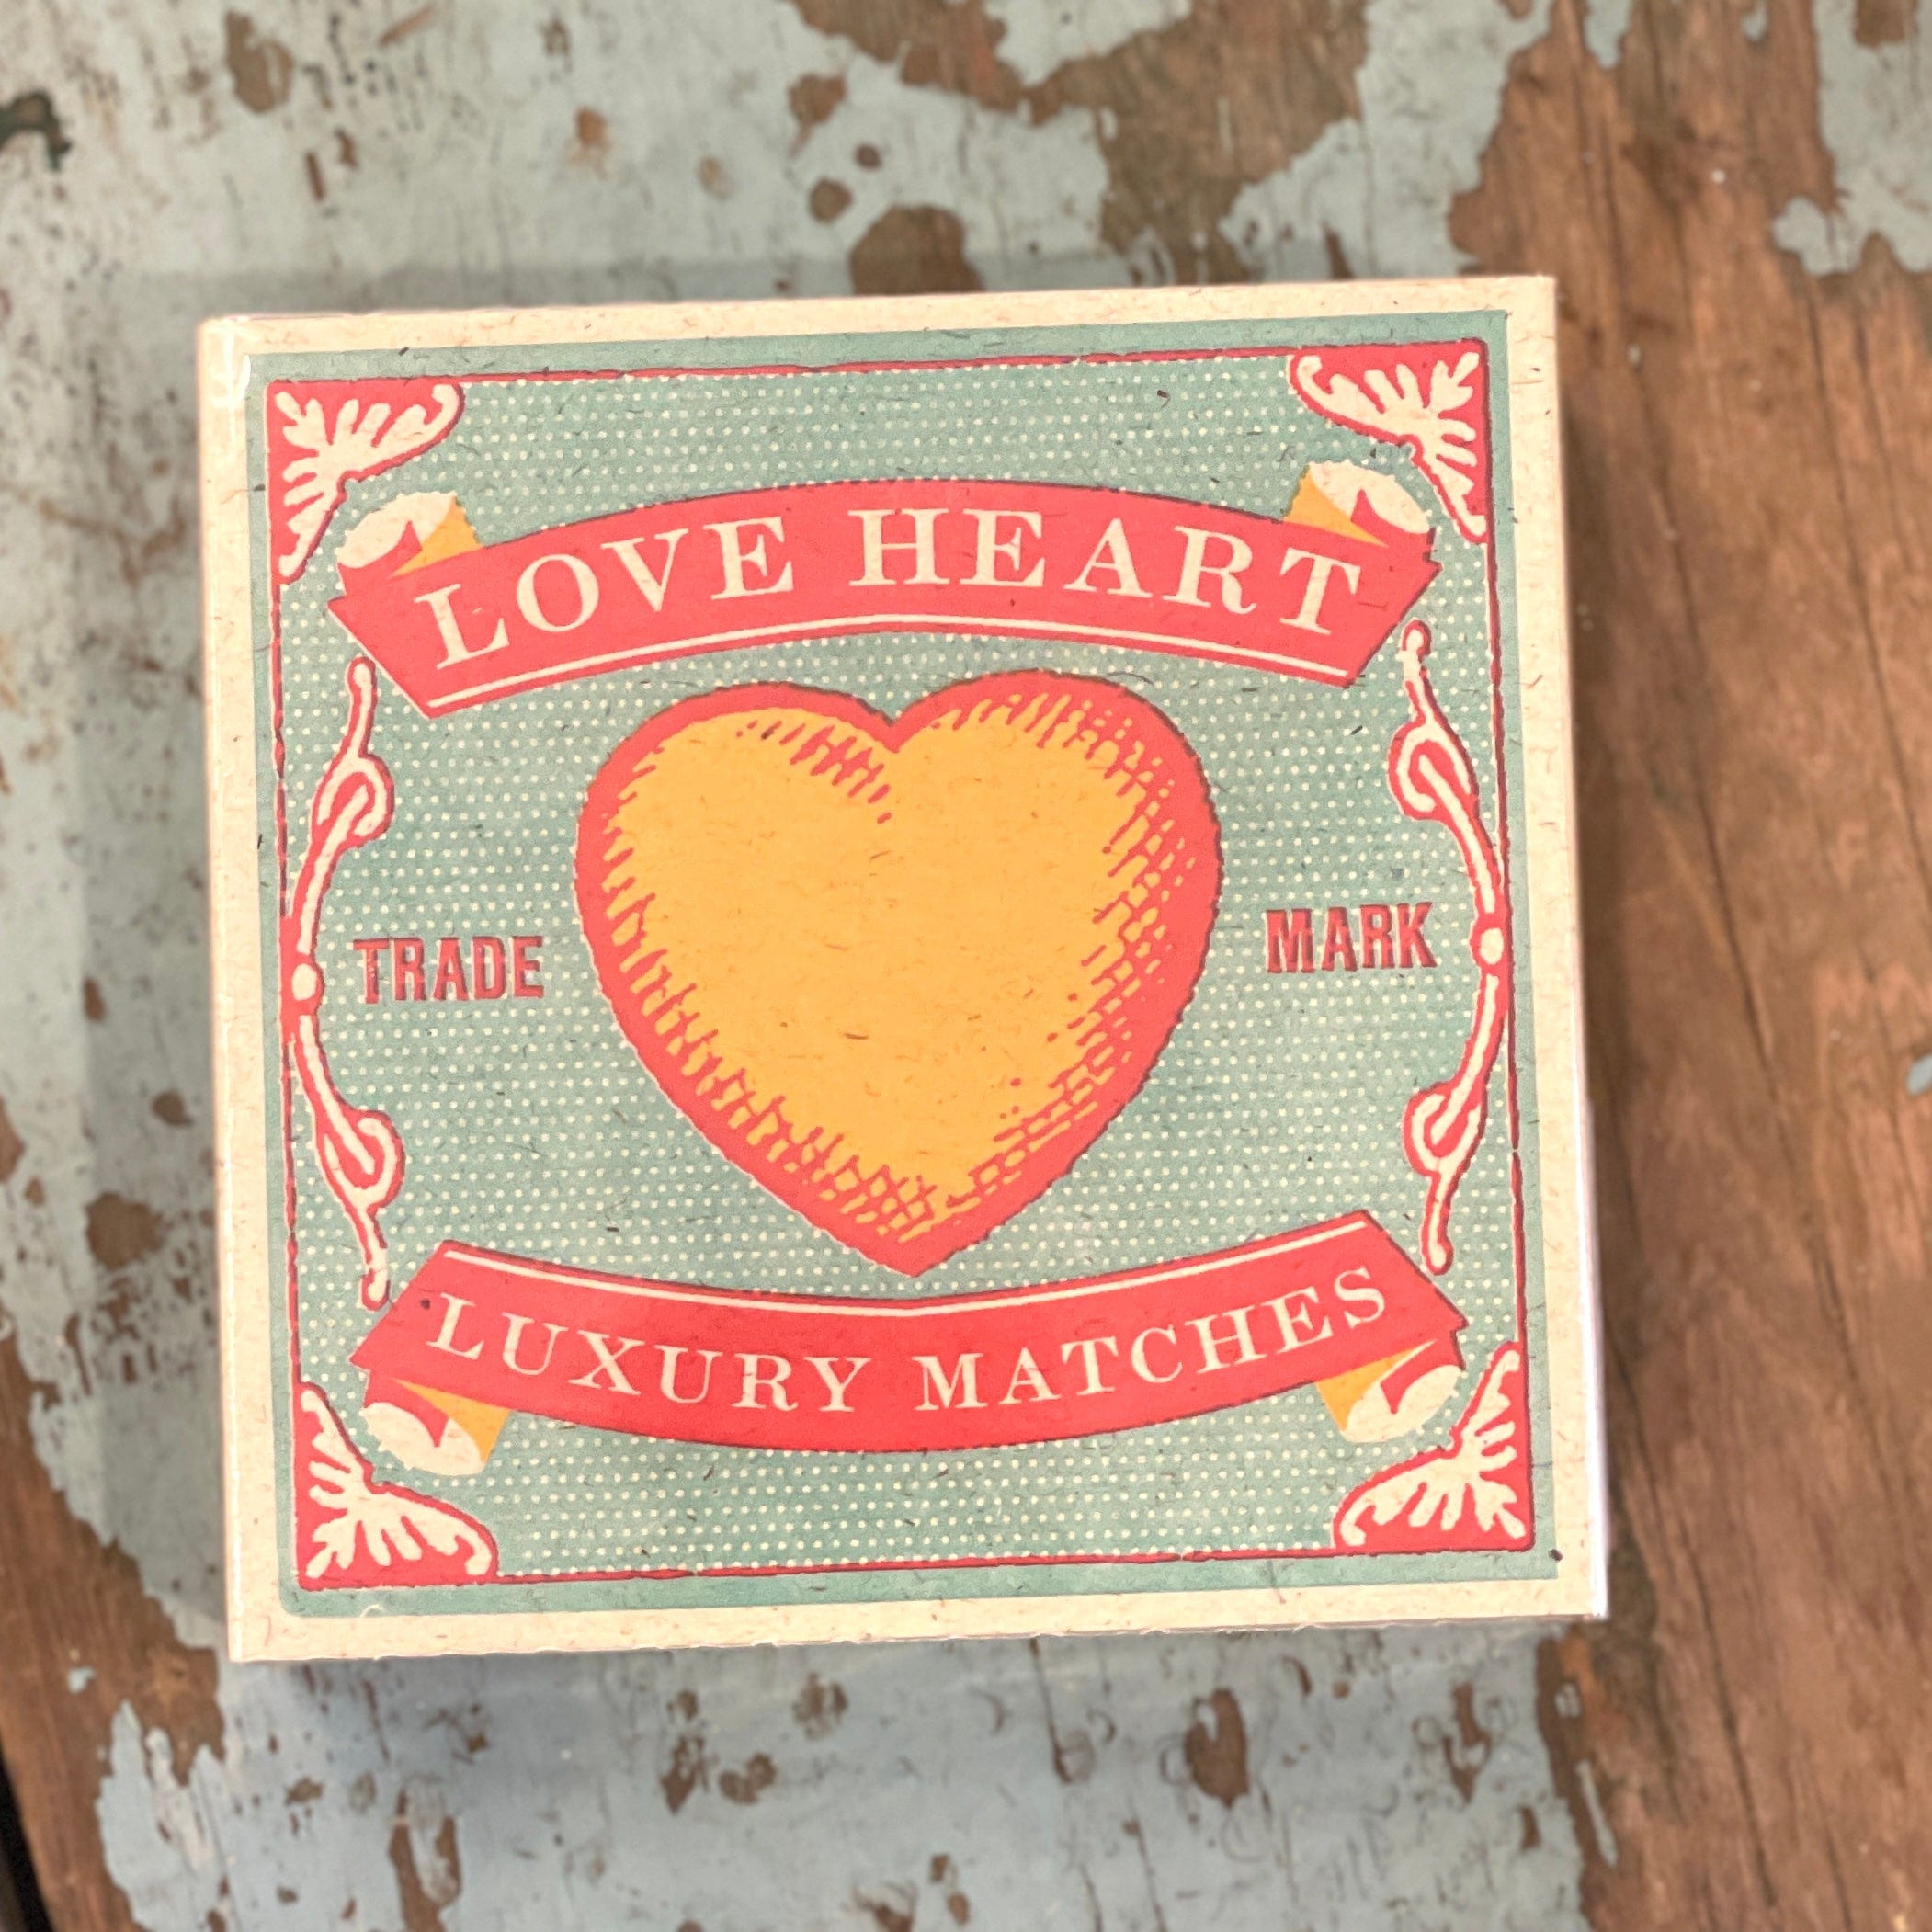 Love Heart Archivist Box Matches - PORCH